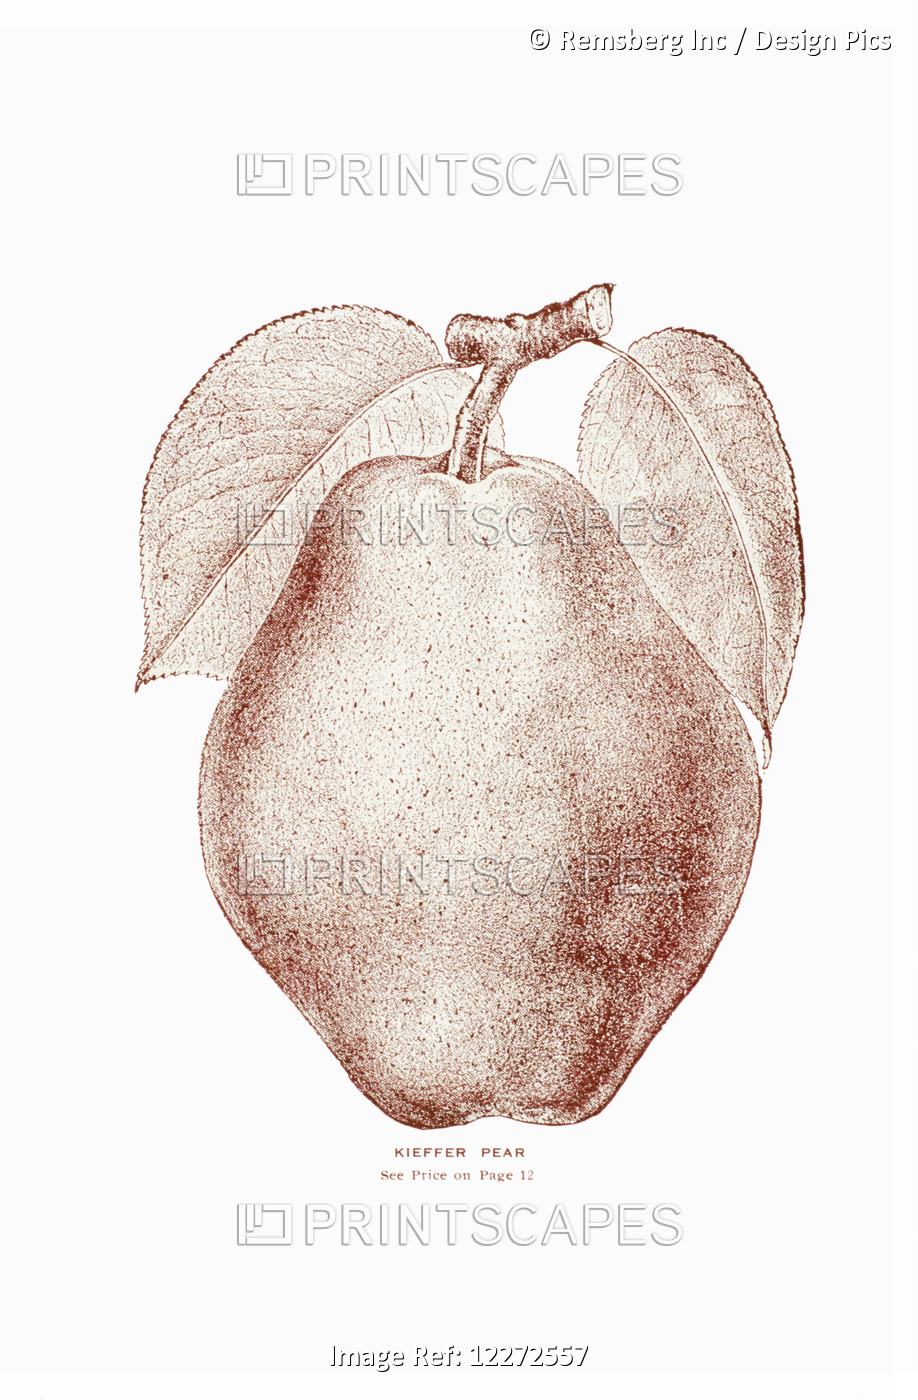 Historic Illustration Of Kieffer Pear From 20th Century.